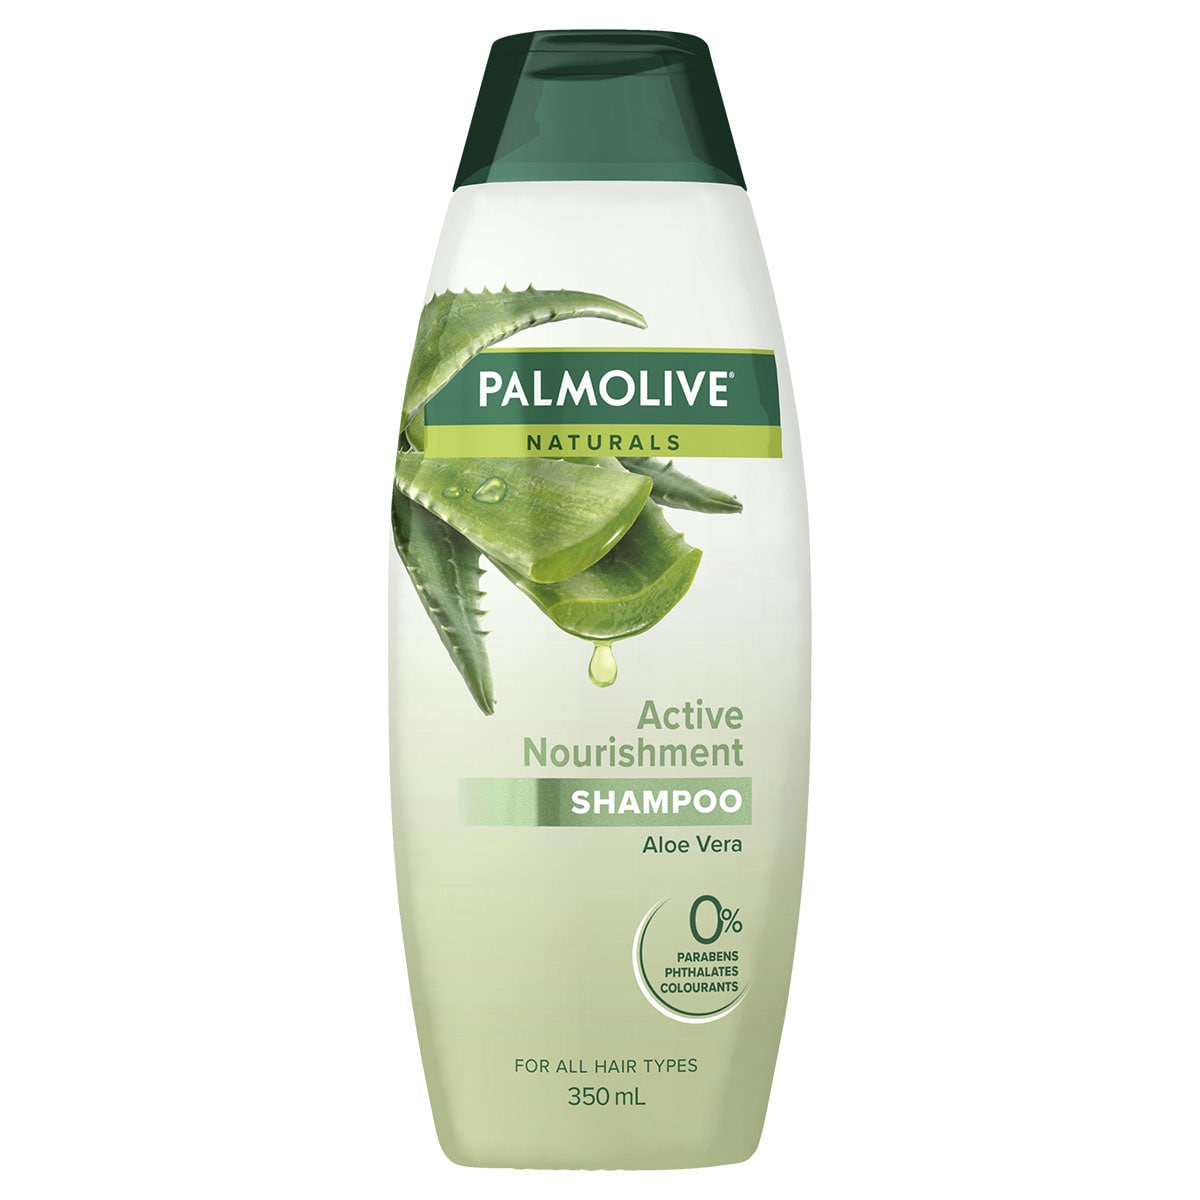 Palmolive Active Nourishment Shampoo Aloe Vera 350ml